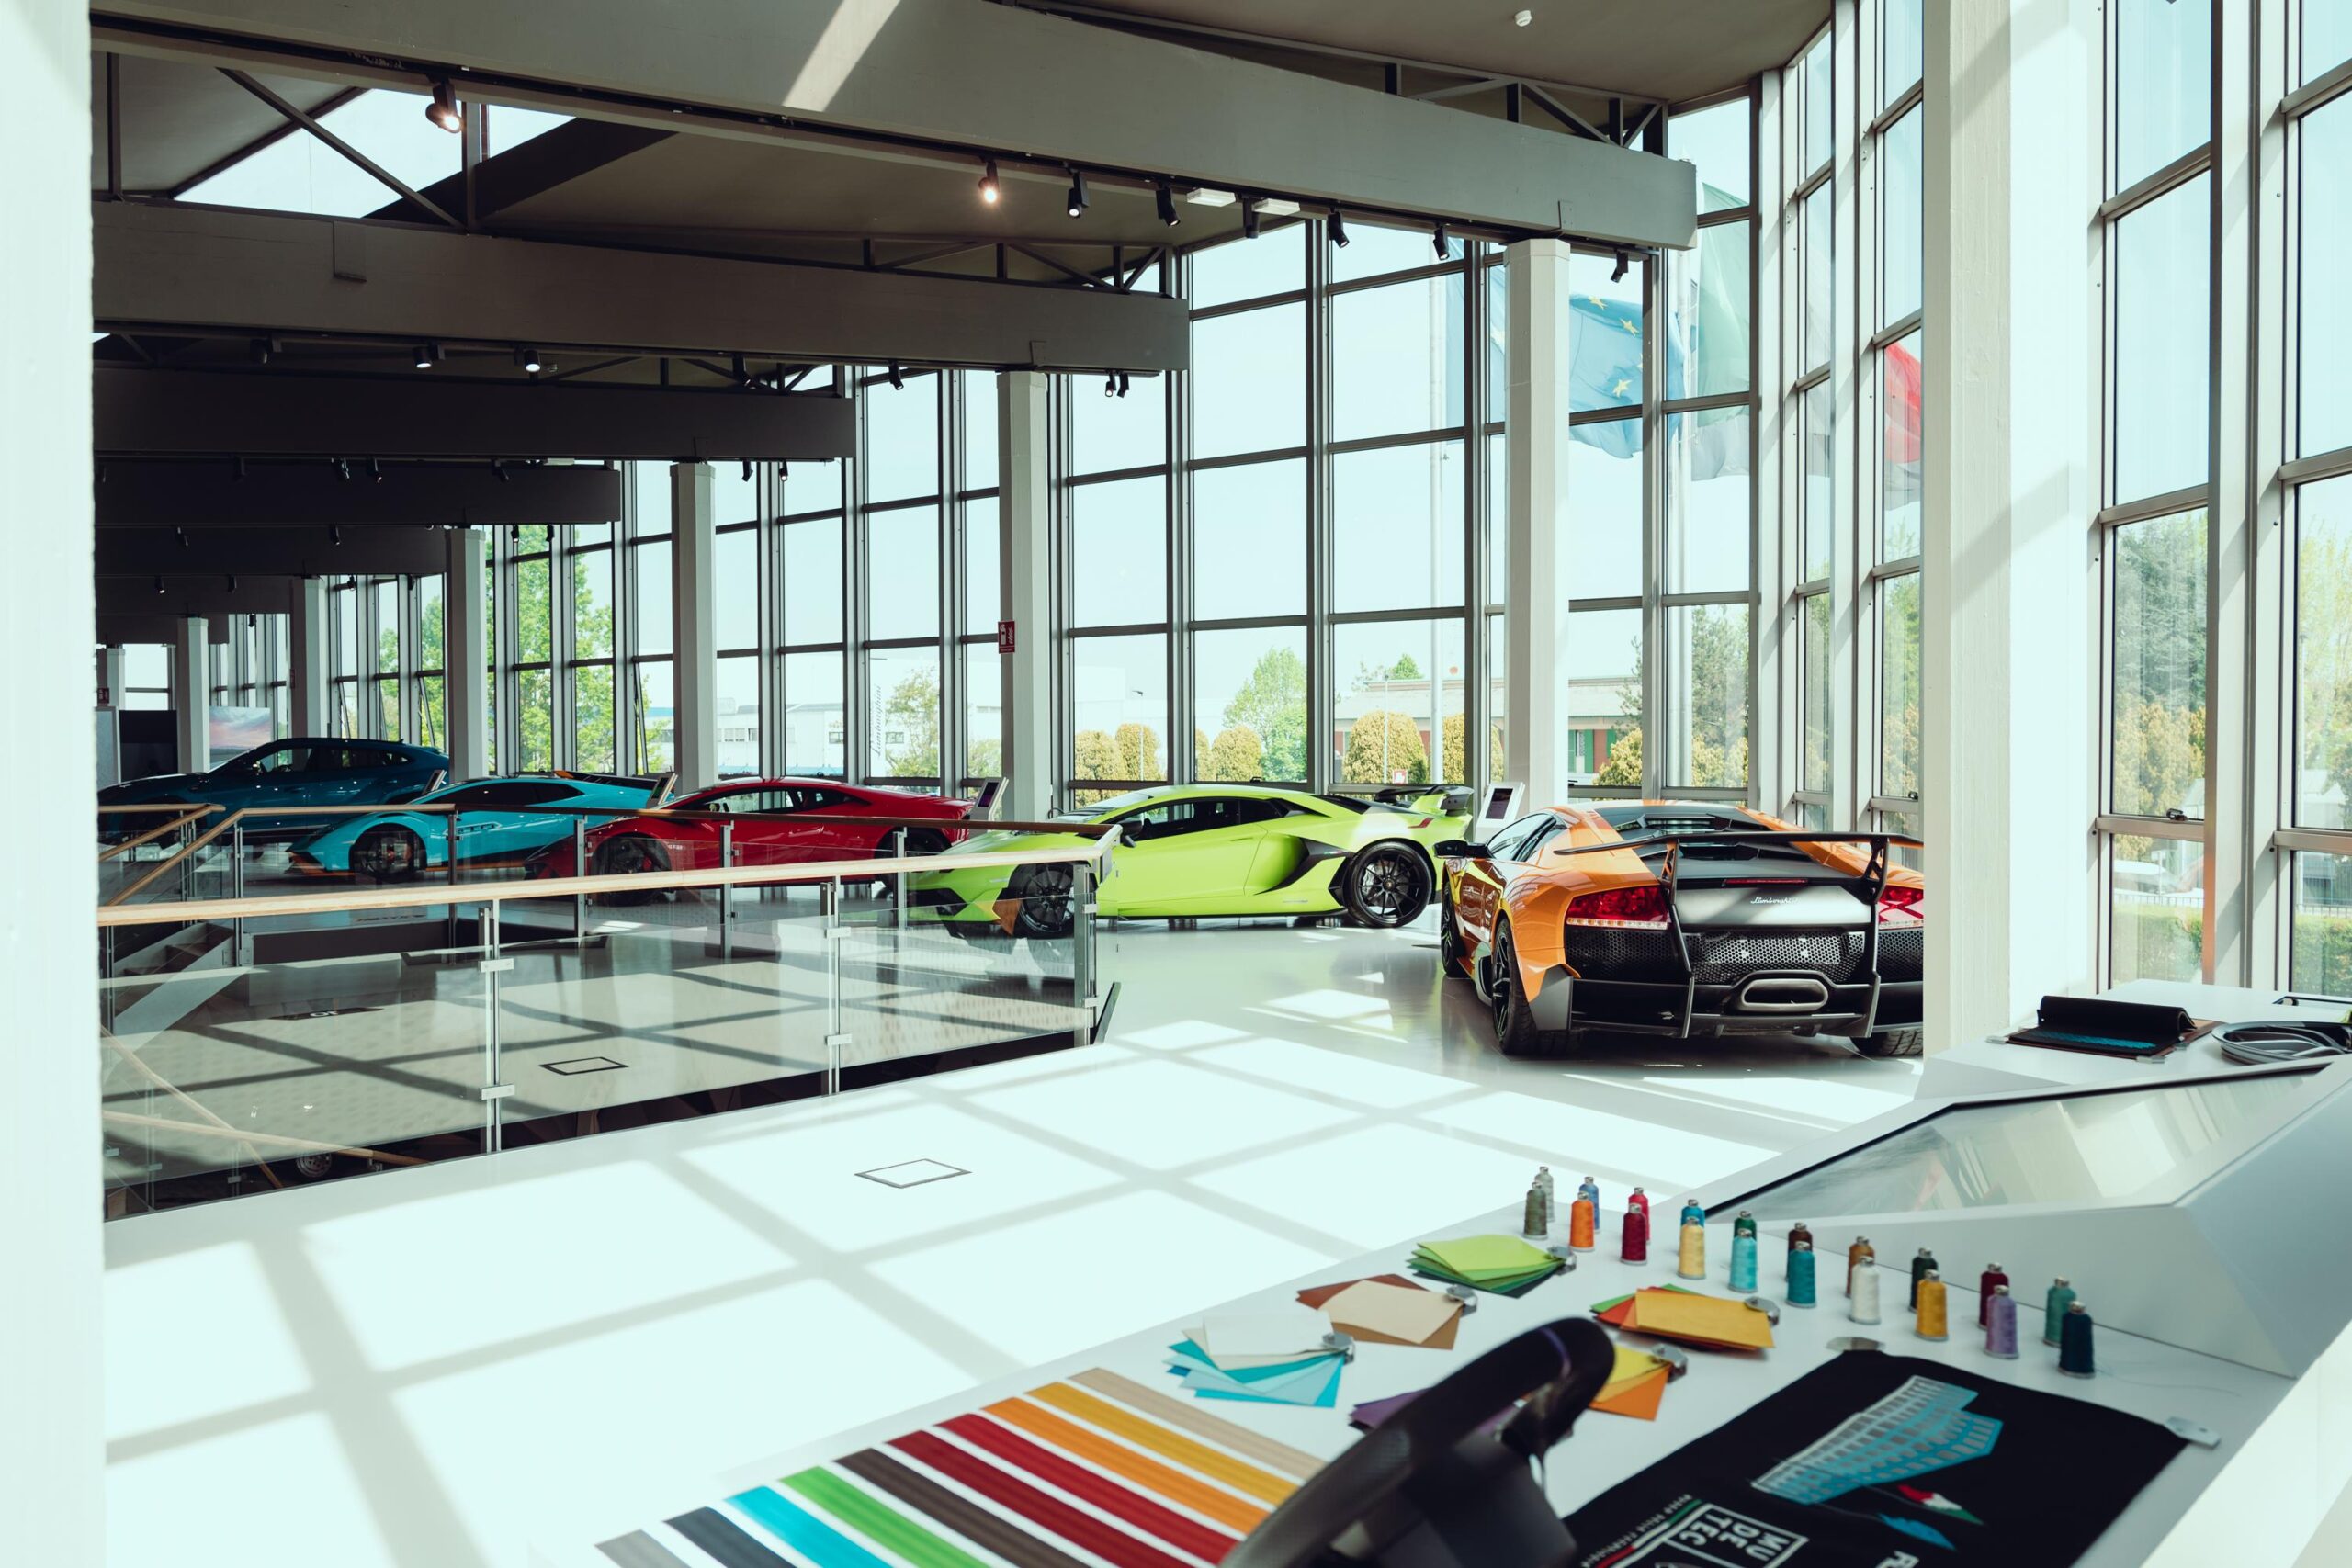 "Museo Automobili Lamborghini" renovation